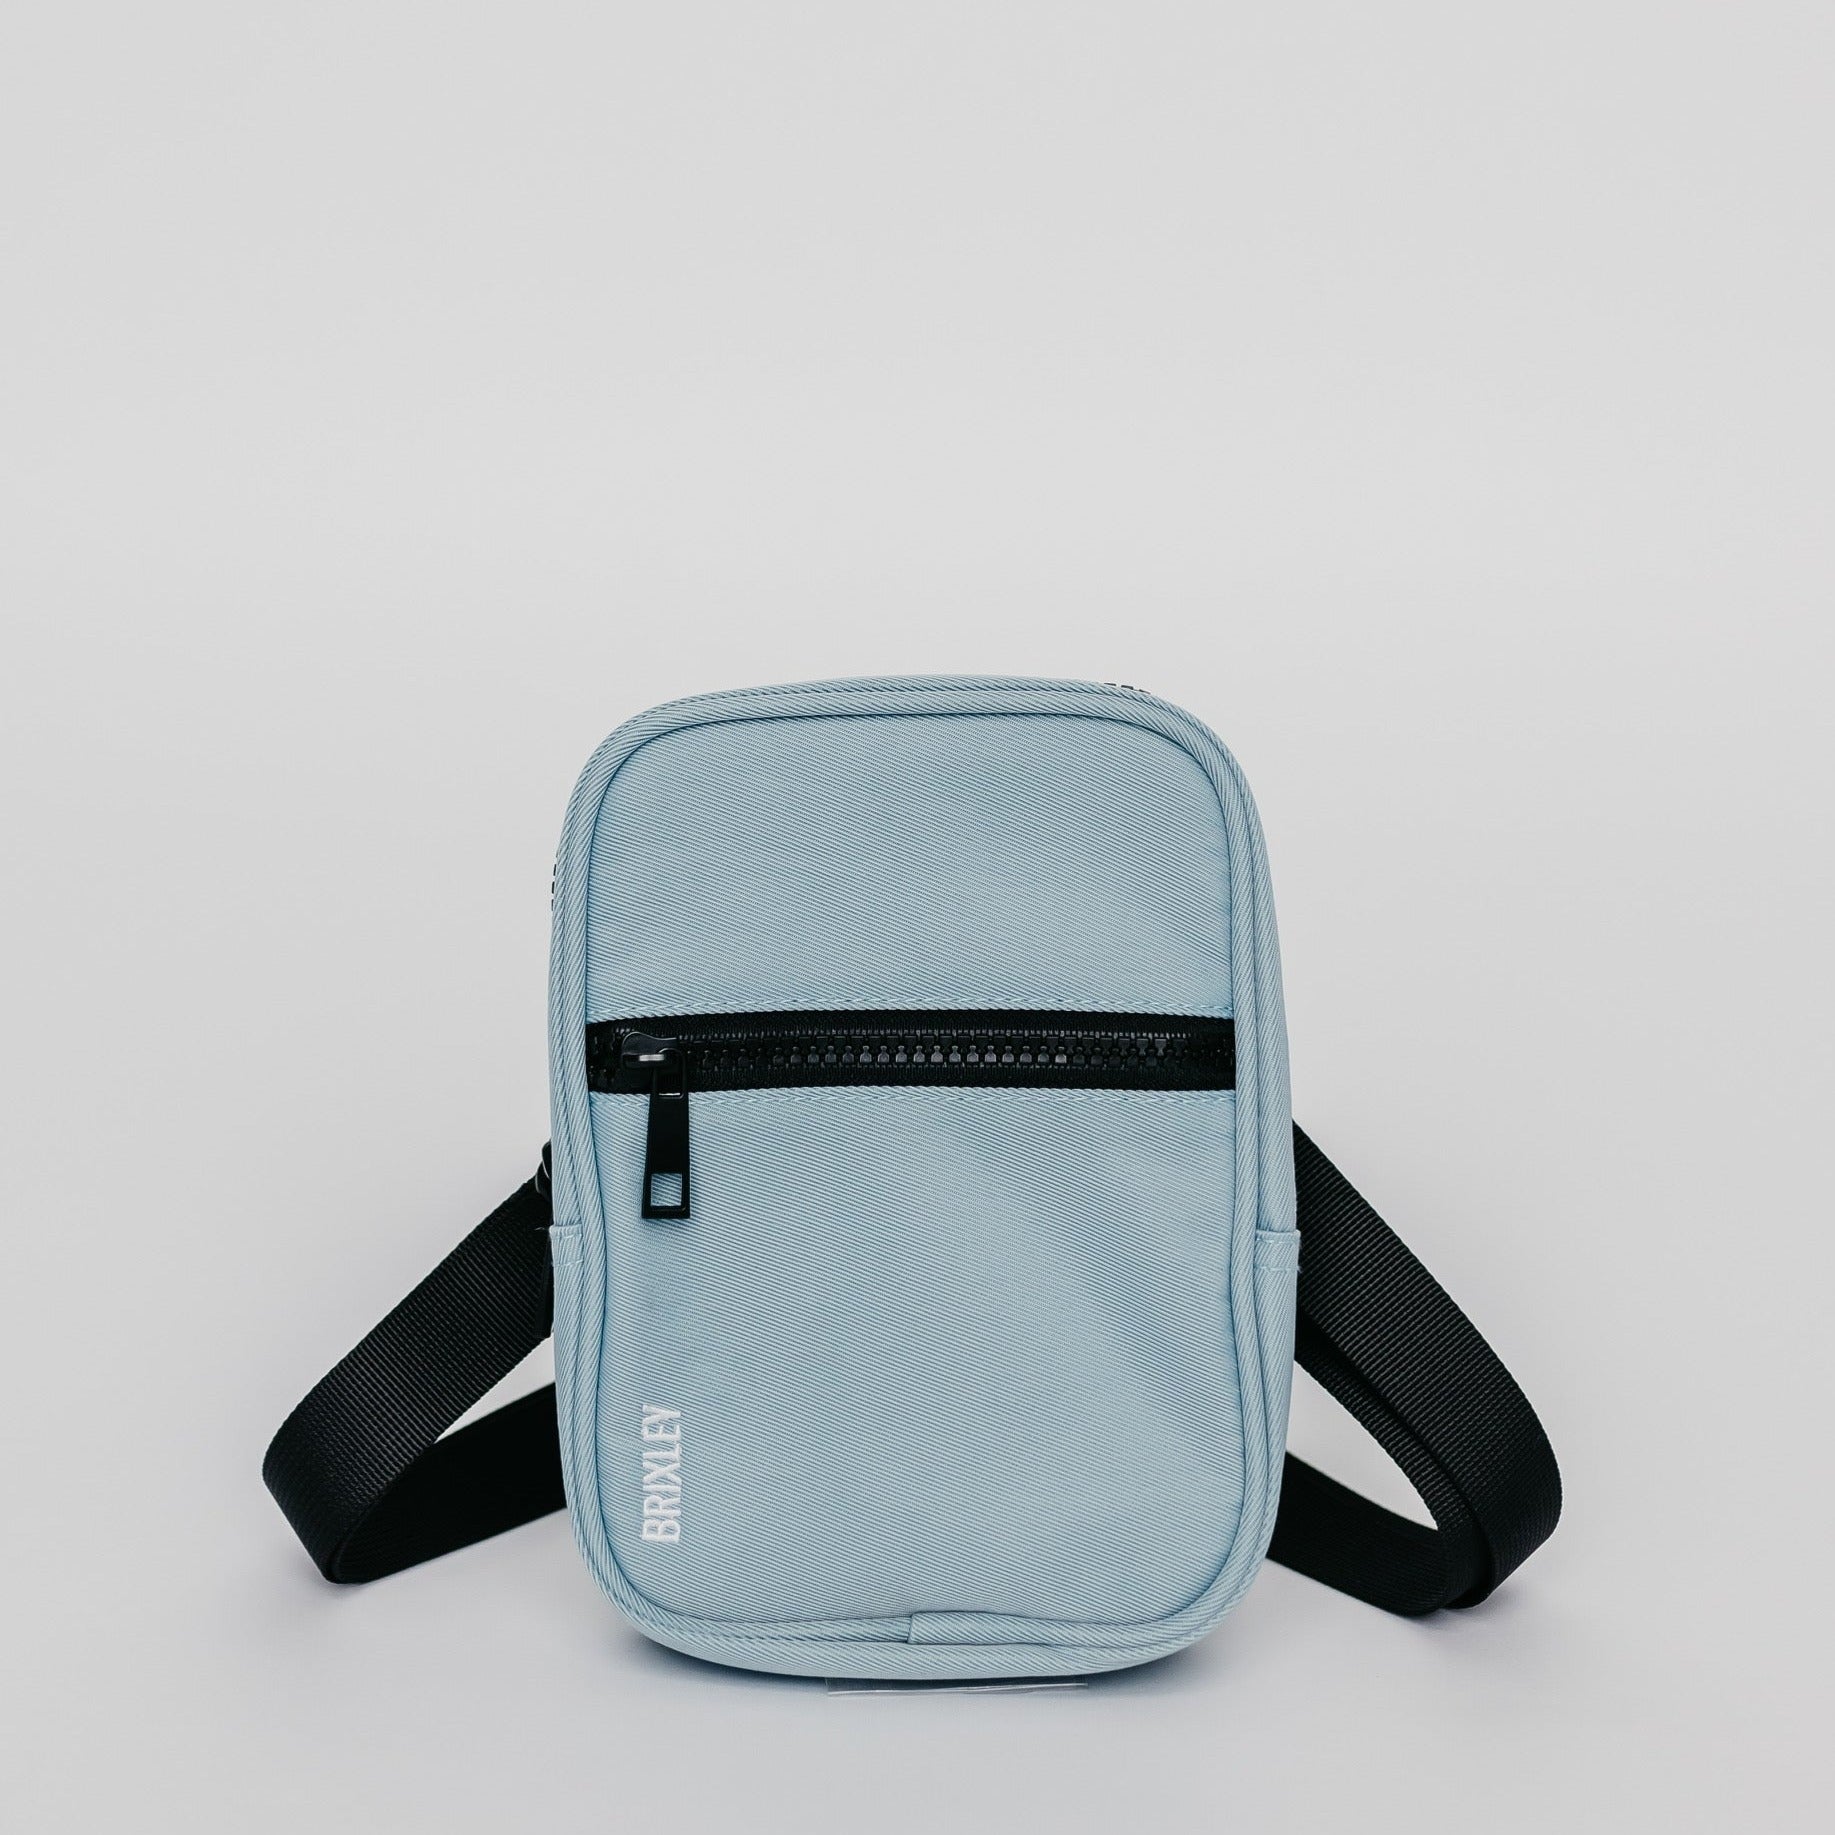 New Men's Boys Sling Bag With USB Charging Chest Pack Crossbody Shoulder  Bags. | eBay